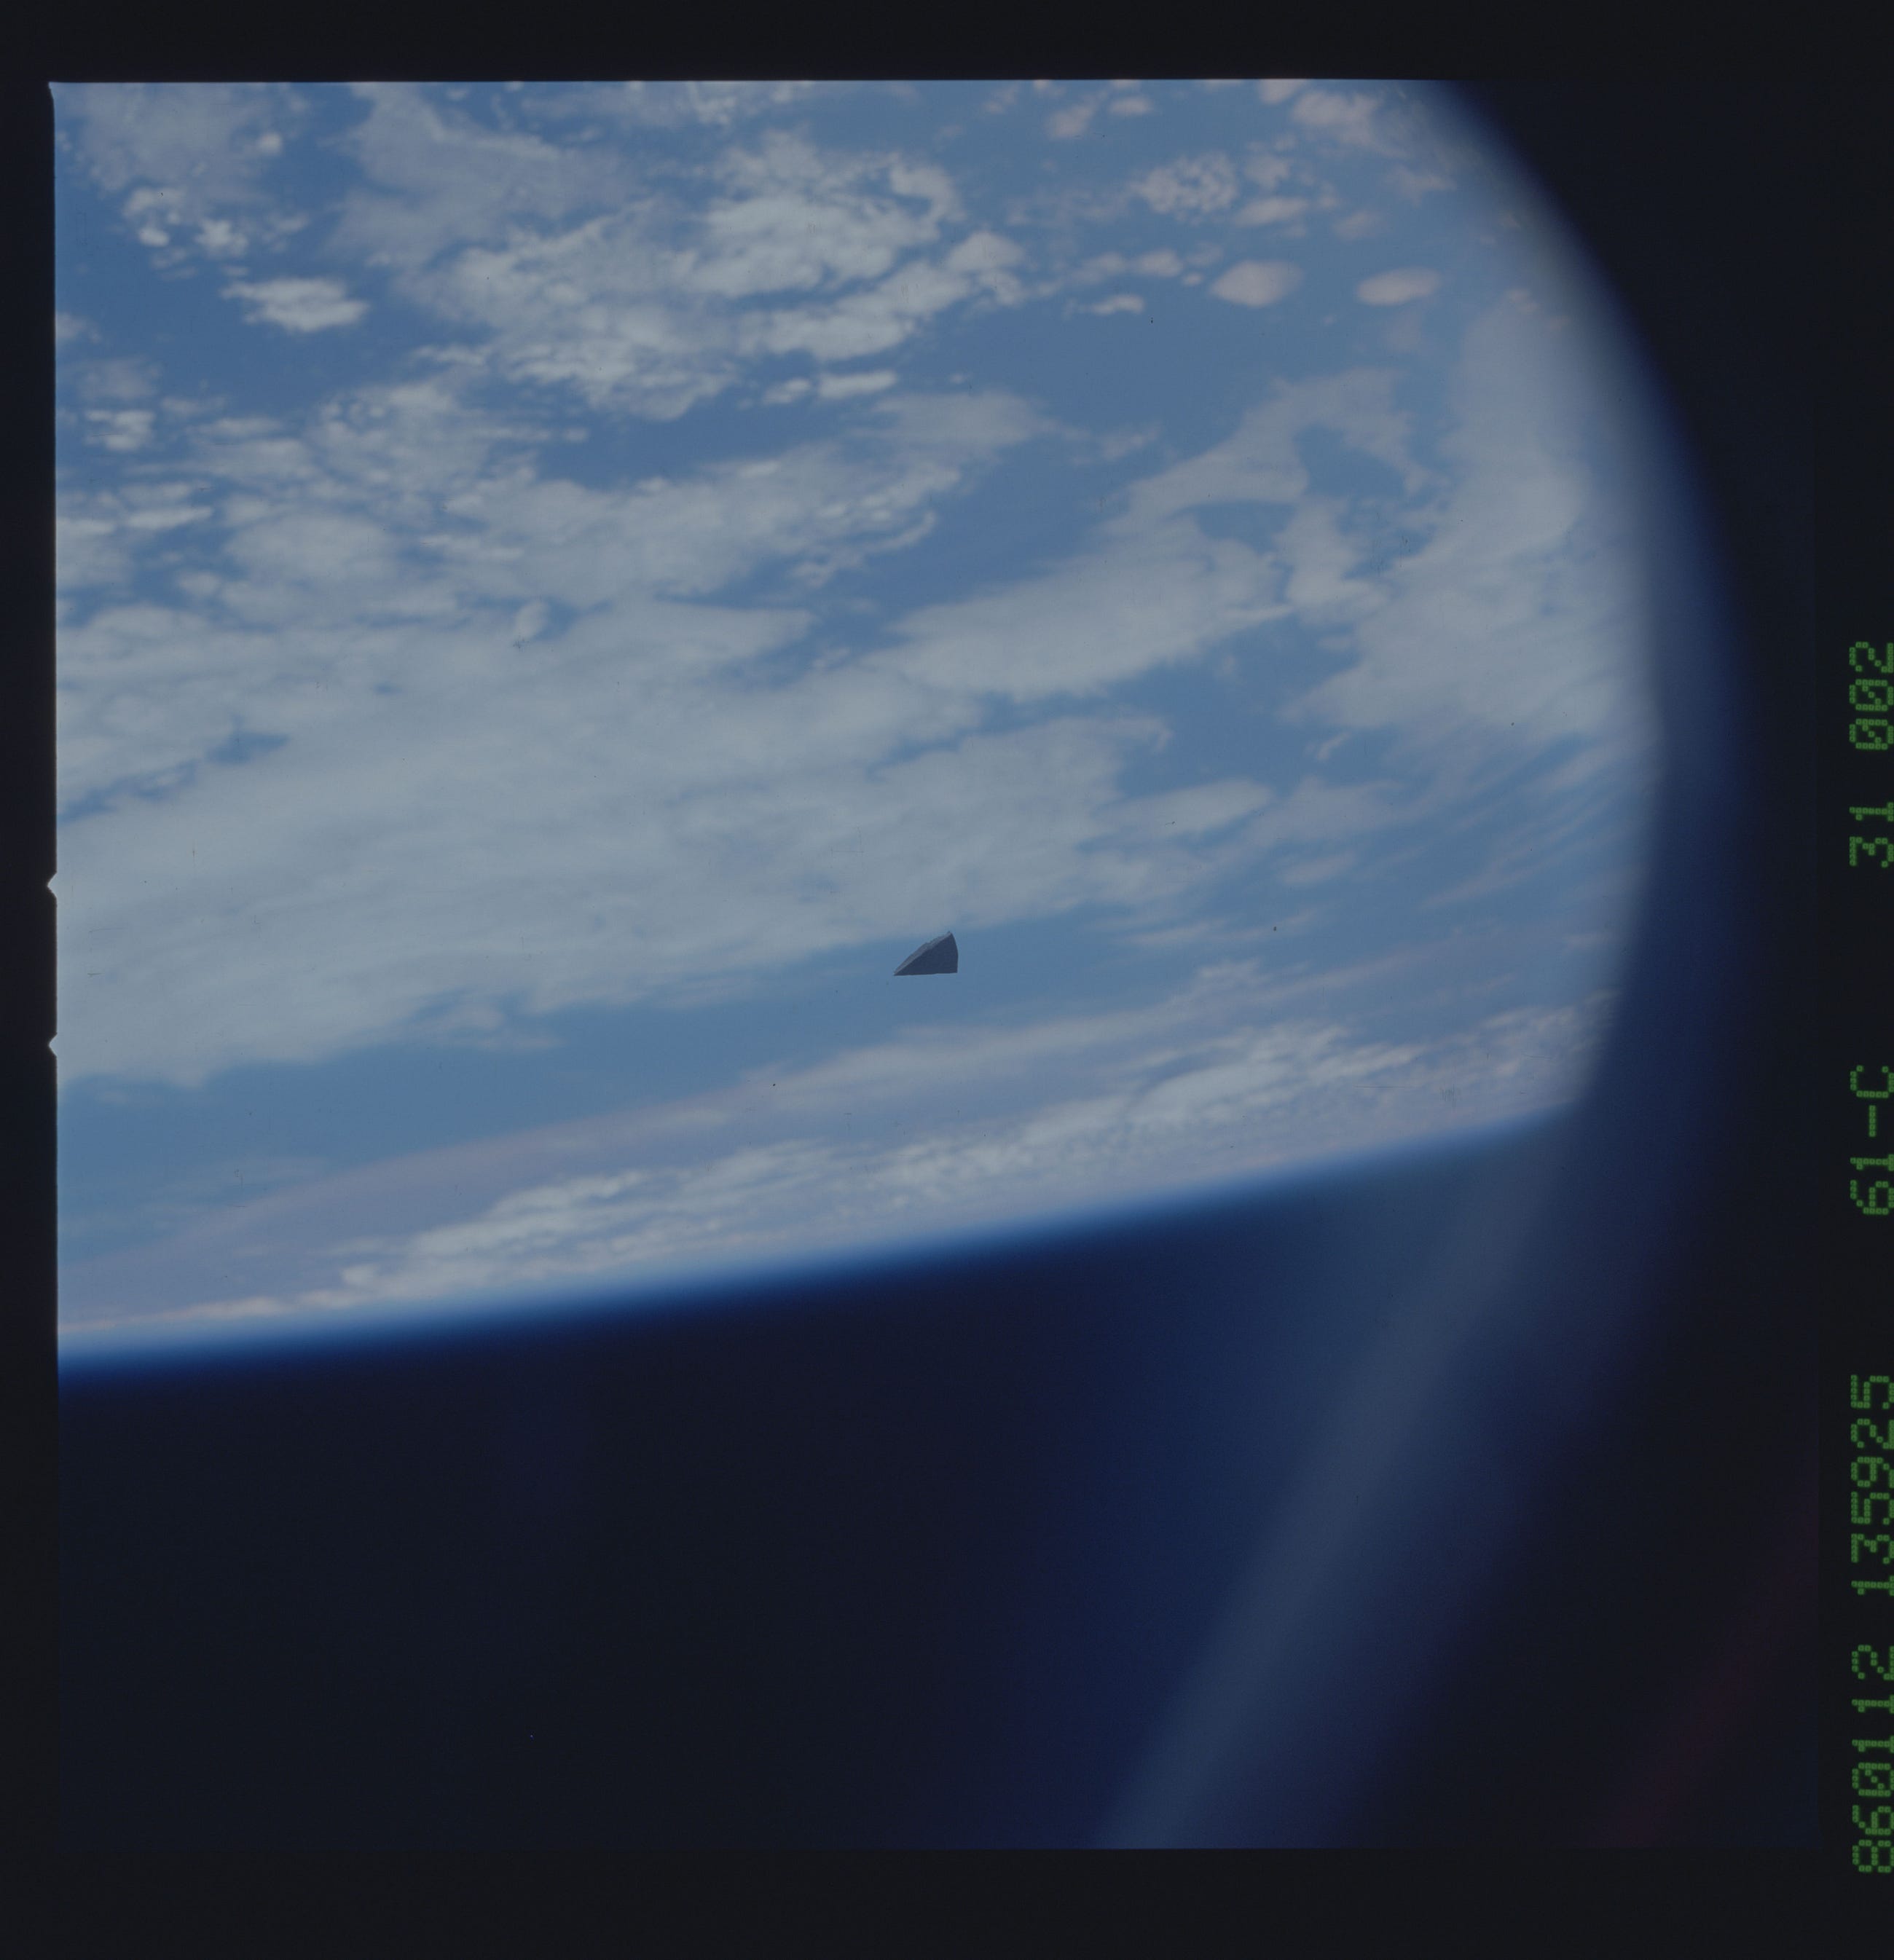 Giant Triangular UFO Photos Unearthed on NASA Website